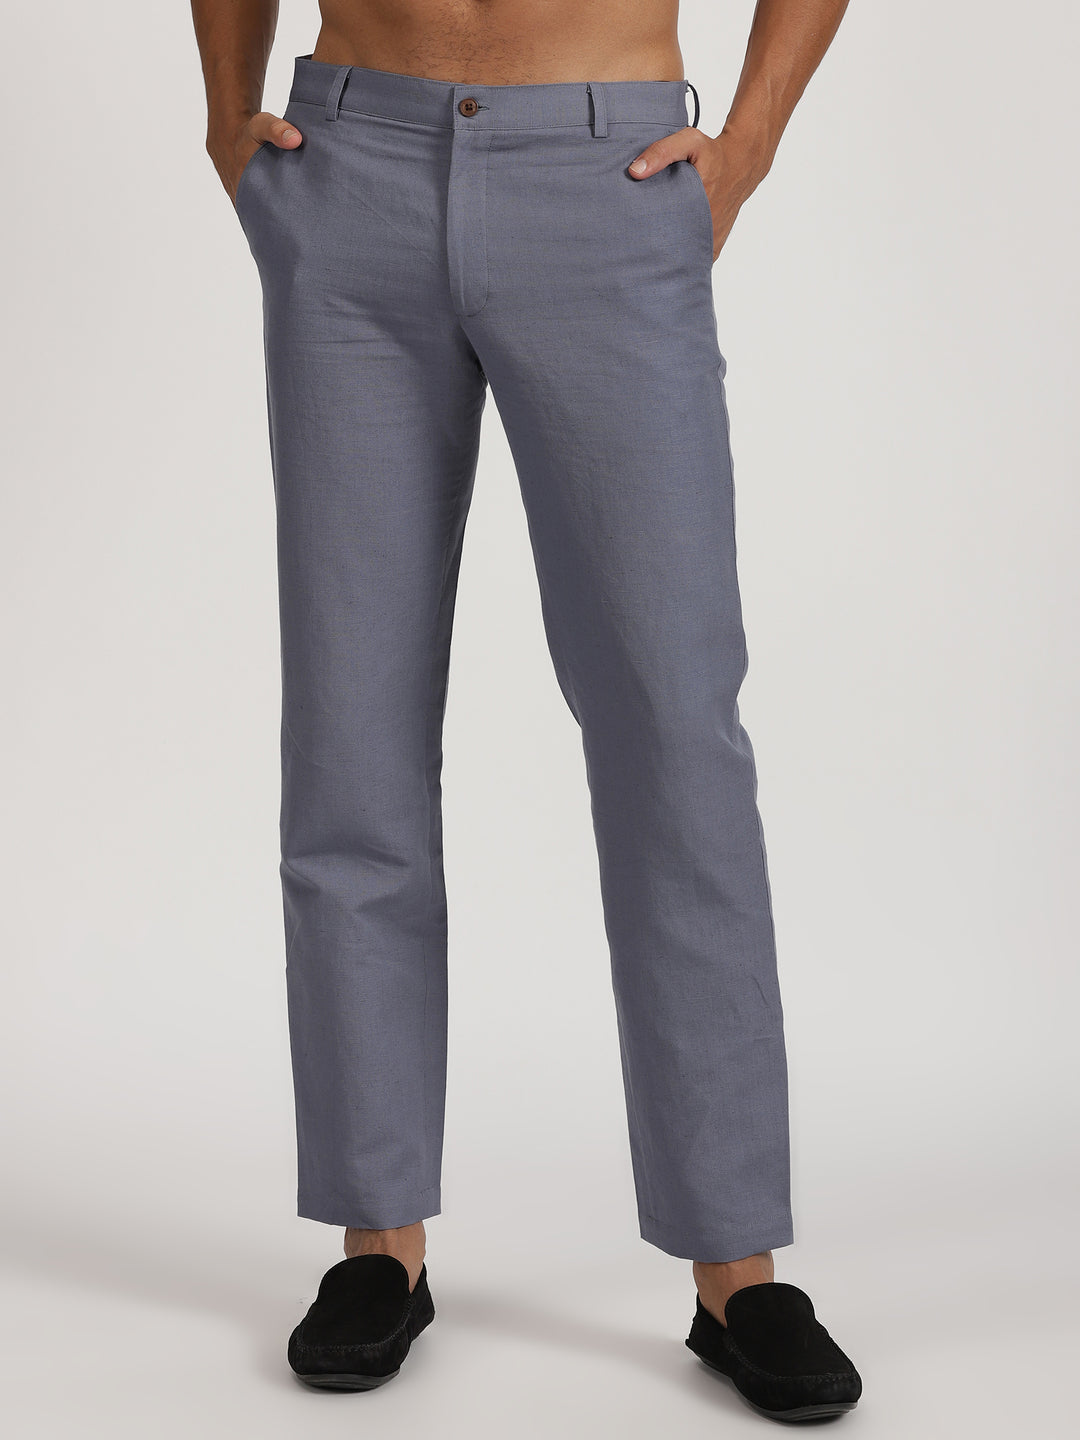 Ian Chino Pants - Men's Linen Trousers - Pitch Blue